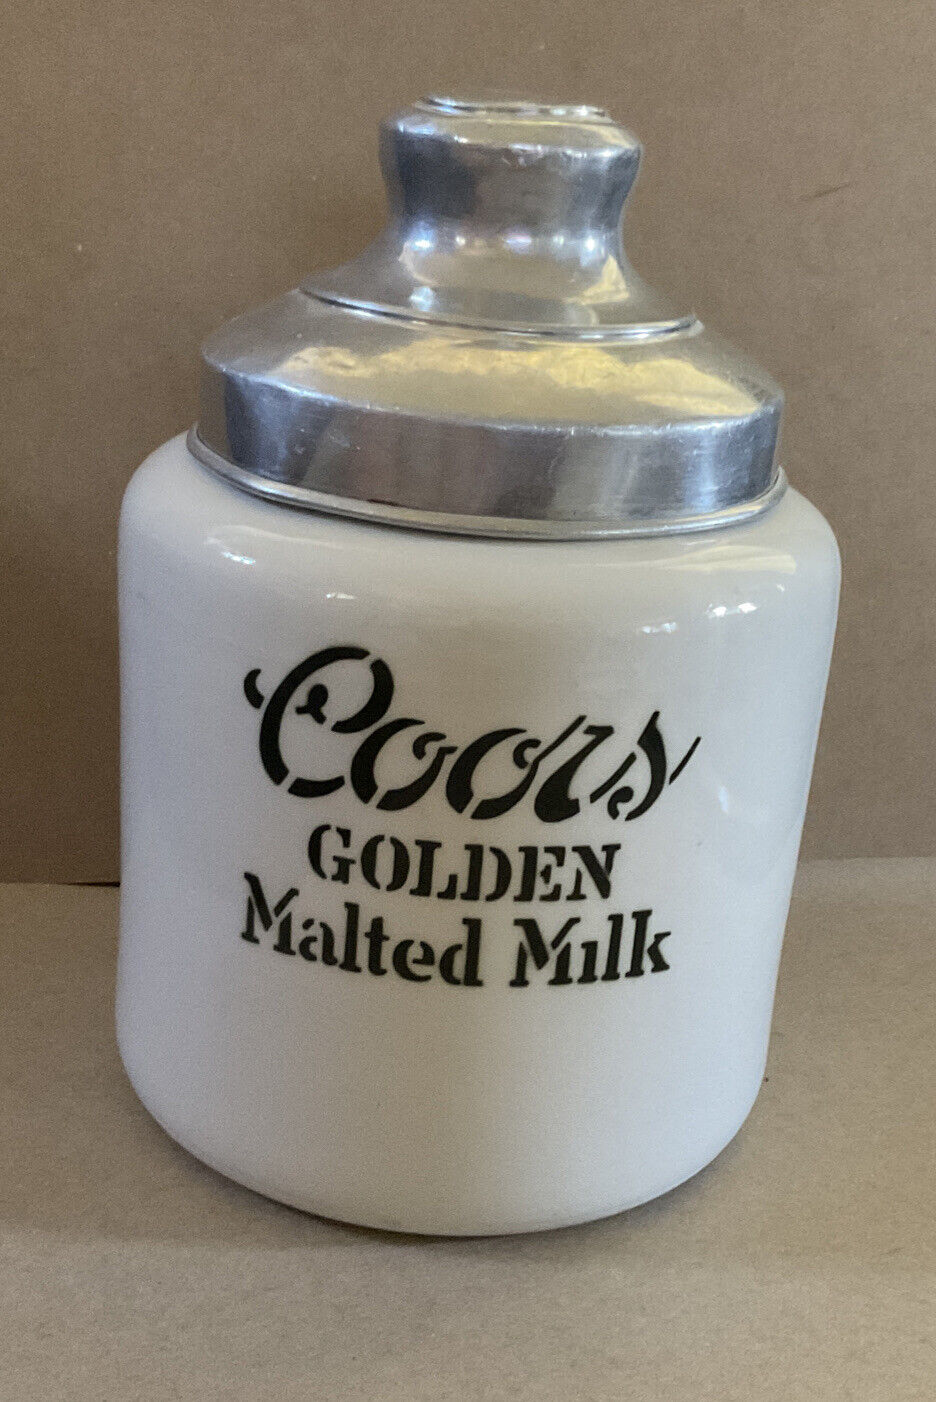 Antique Coors Milk Golden Malted Milk Porcelain Container